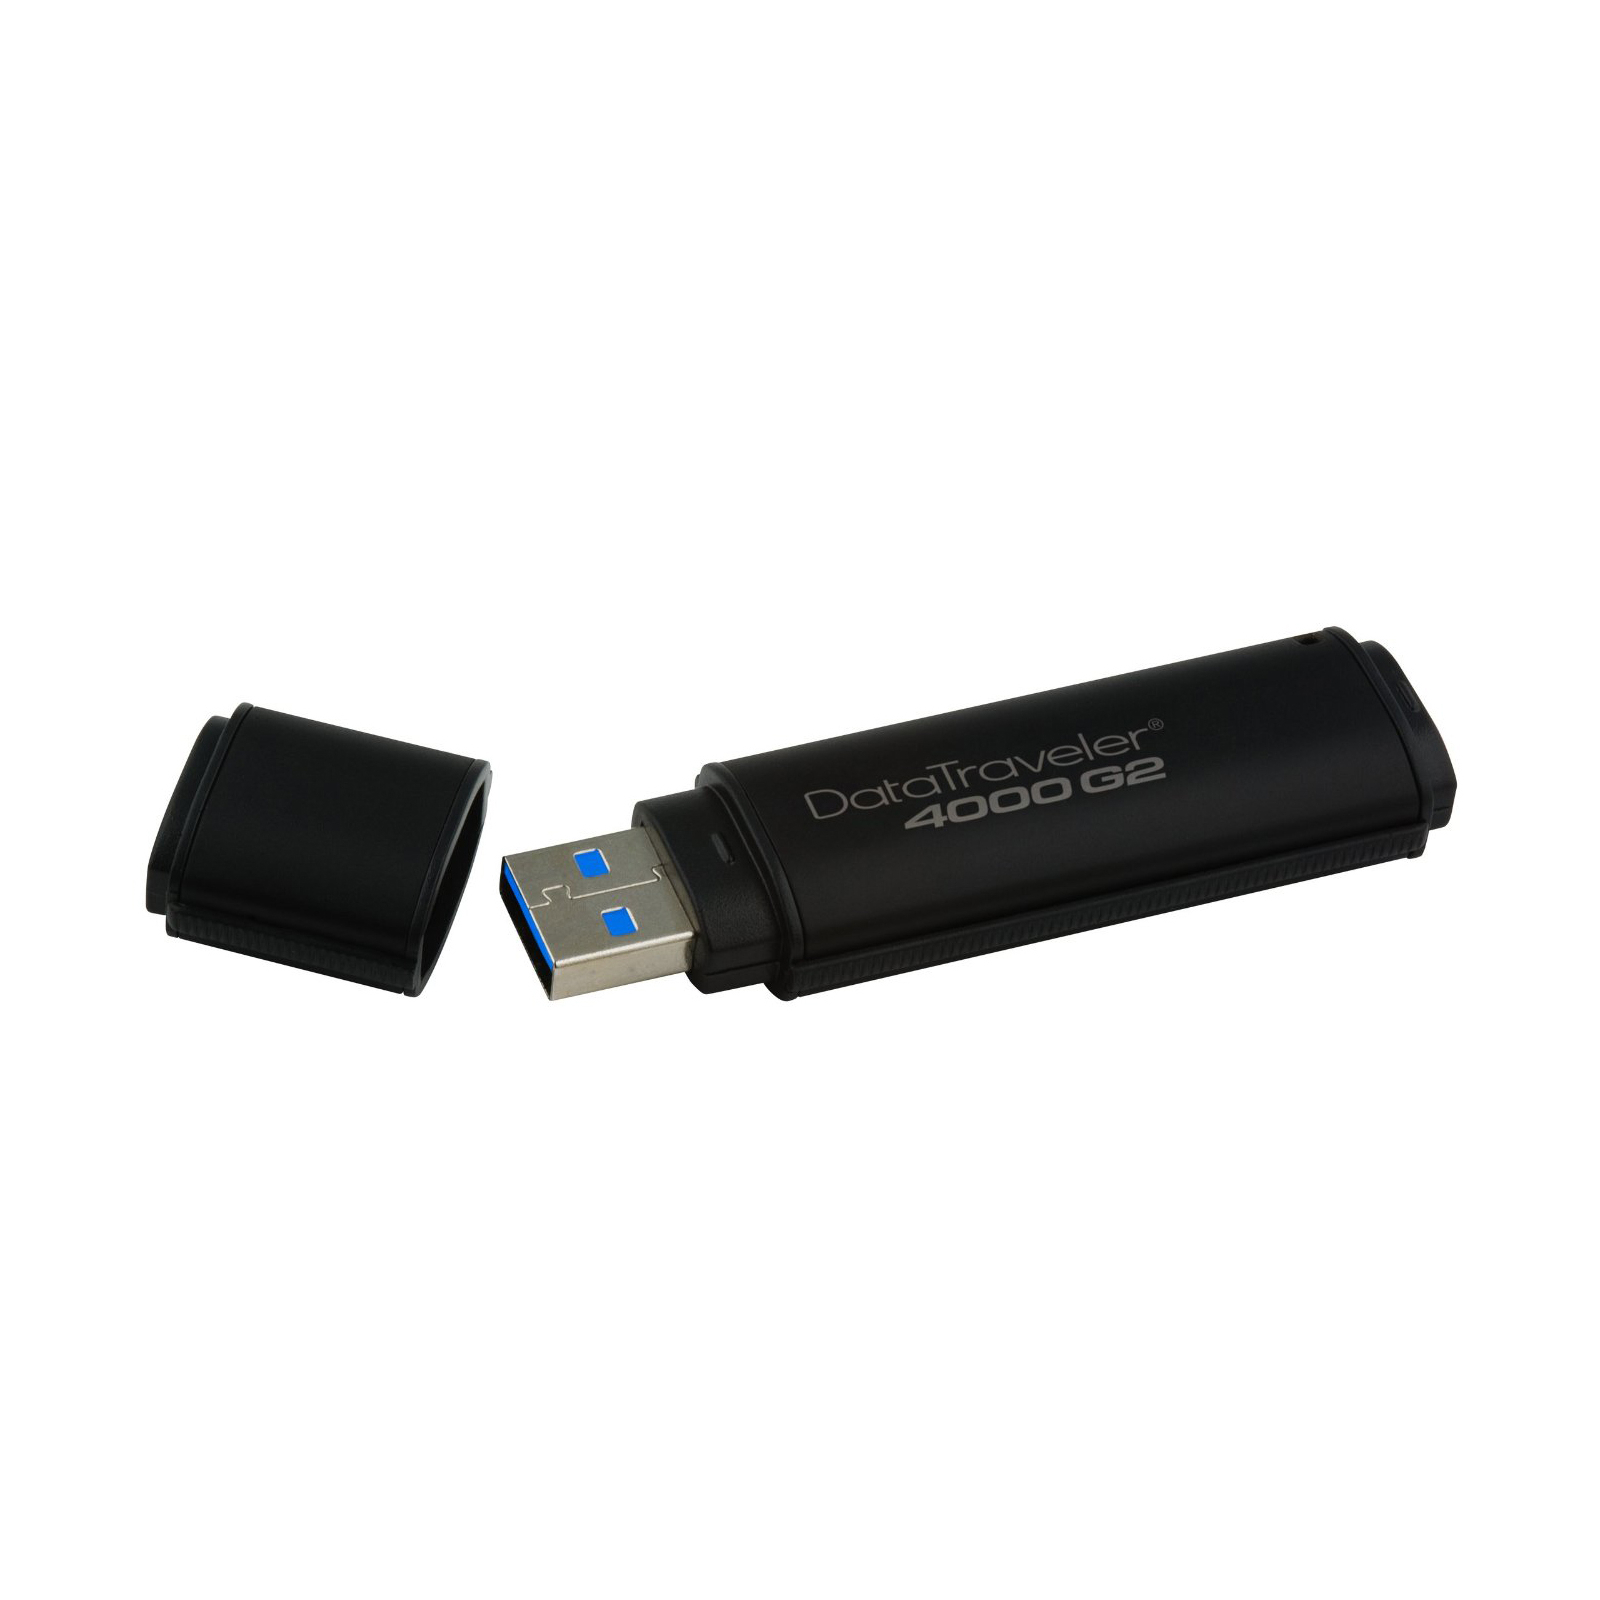 USB флеш накопитель Kingston 16GB DataTraveler 4000 G2 Metal Black USB 3.0 (DT4000G2/16GB) изображение 3